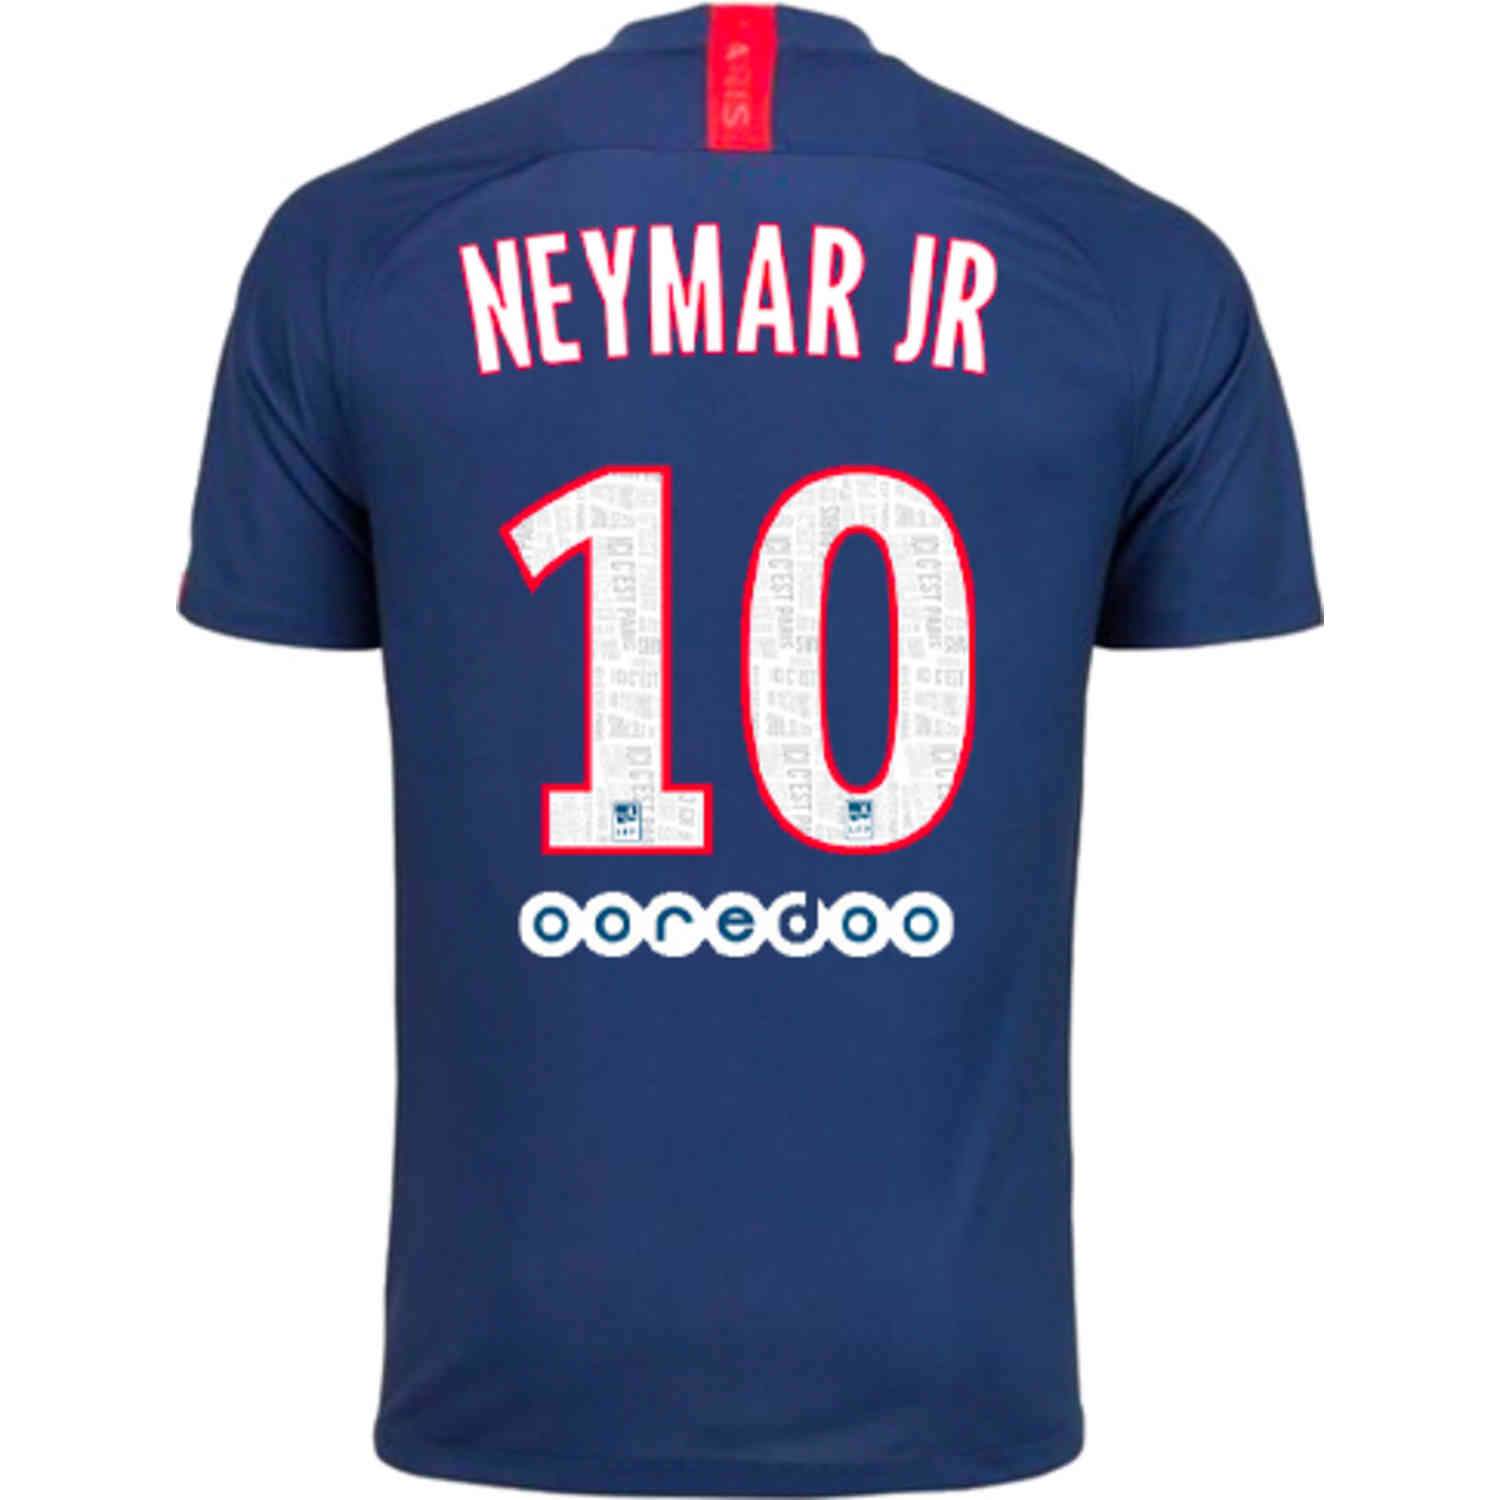 2019/20 Kids Neymar Jr PSG Home Jersey 